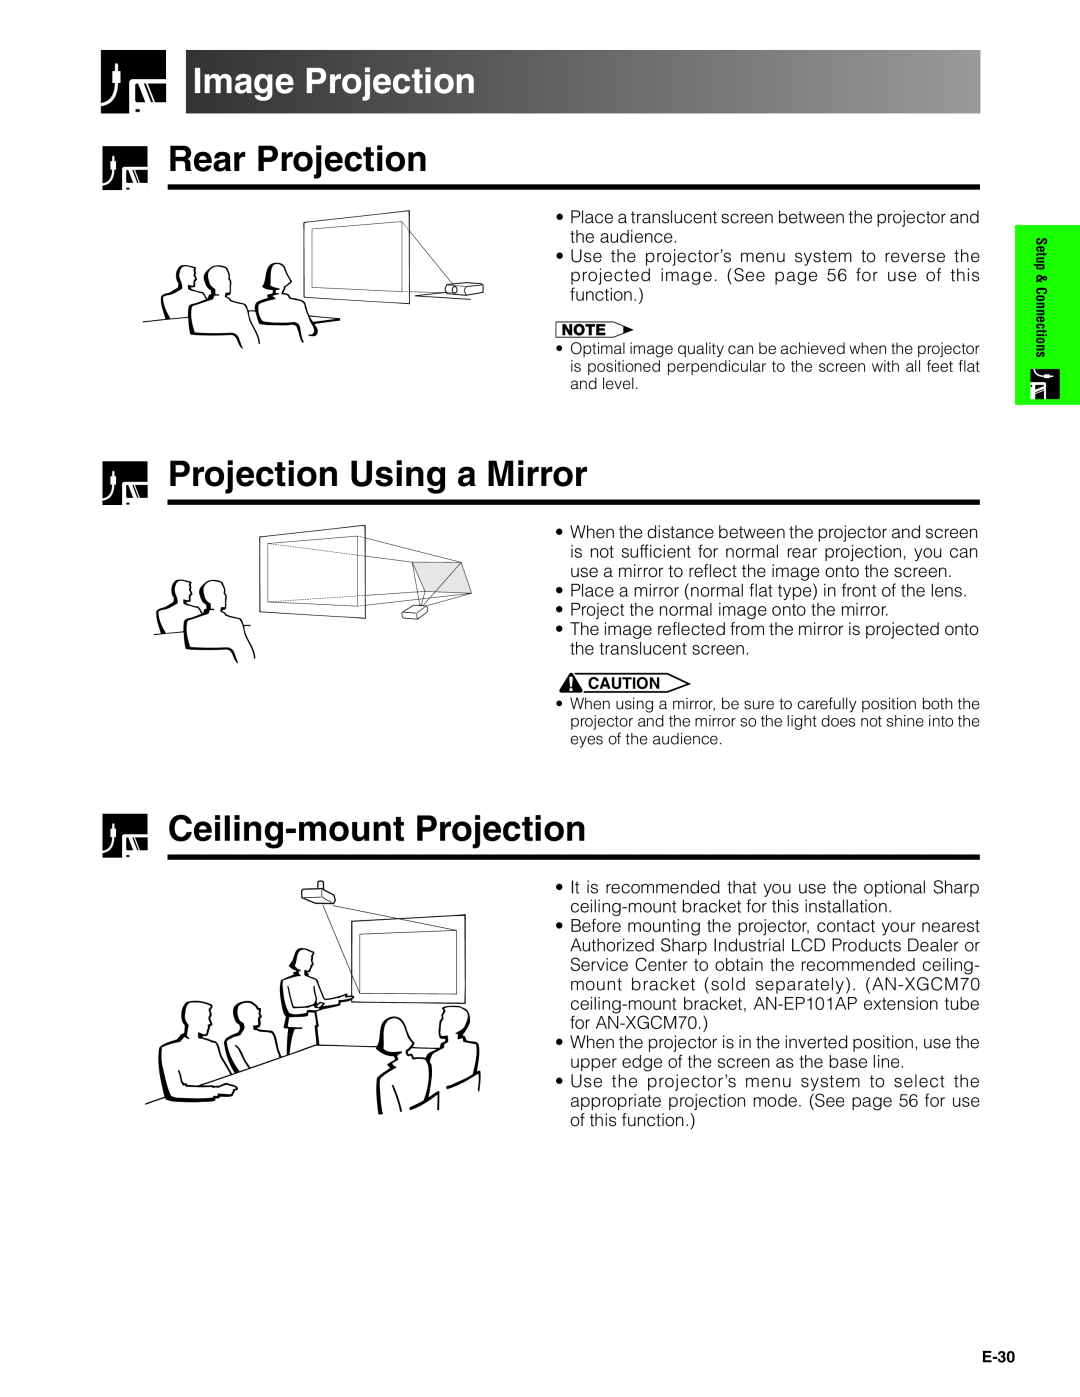 Sharp XG-V10XU operation manual Image Projection, Rear Projection, Projection Using a Mirror, Ceiling-mount Projection 